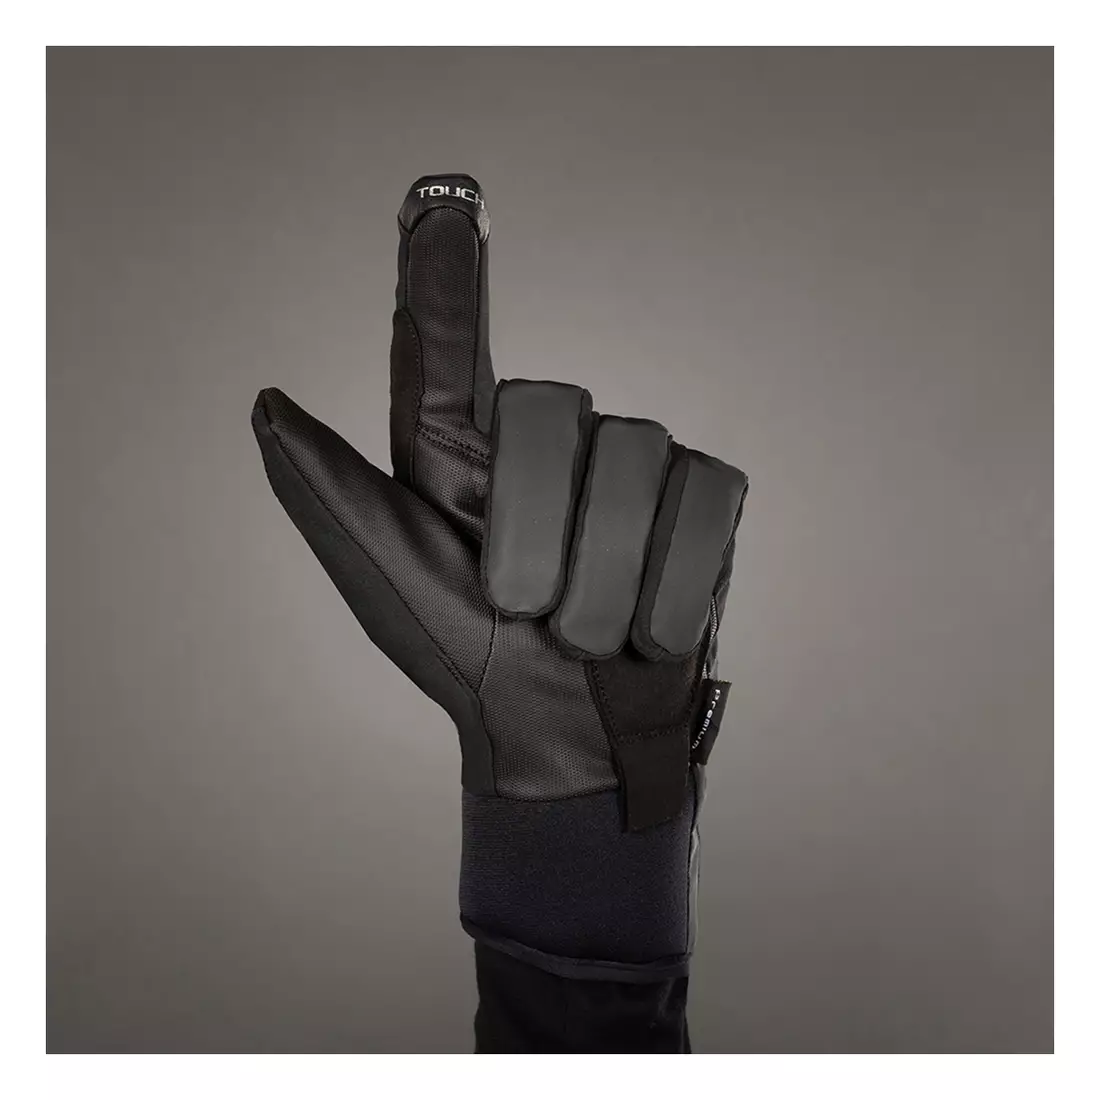 CHIBA THERMO PLUS 3110120C winter gloves Black